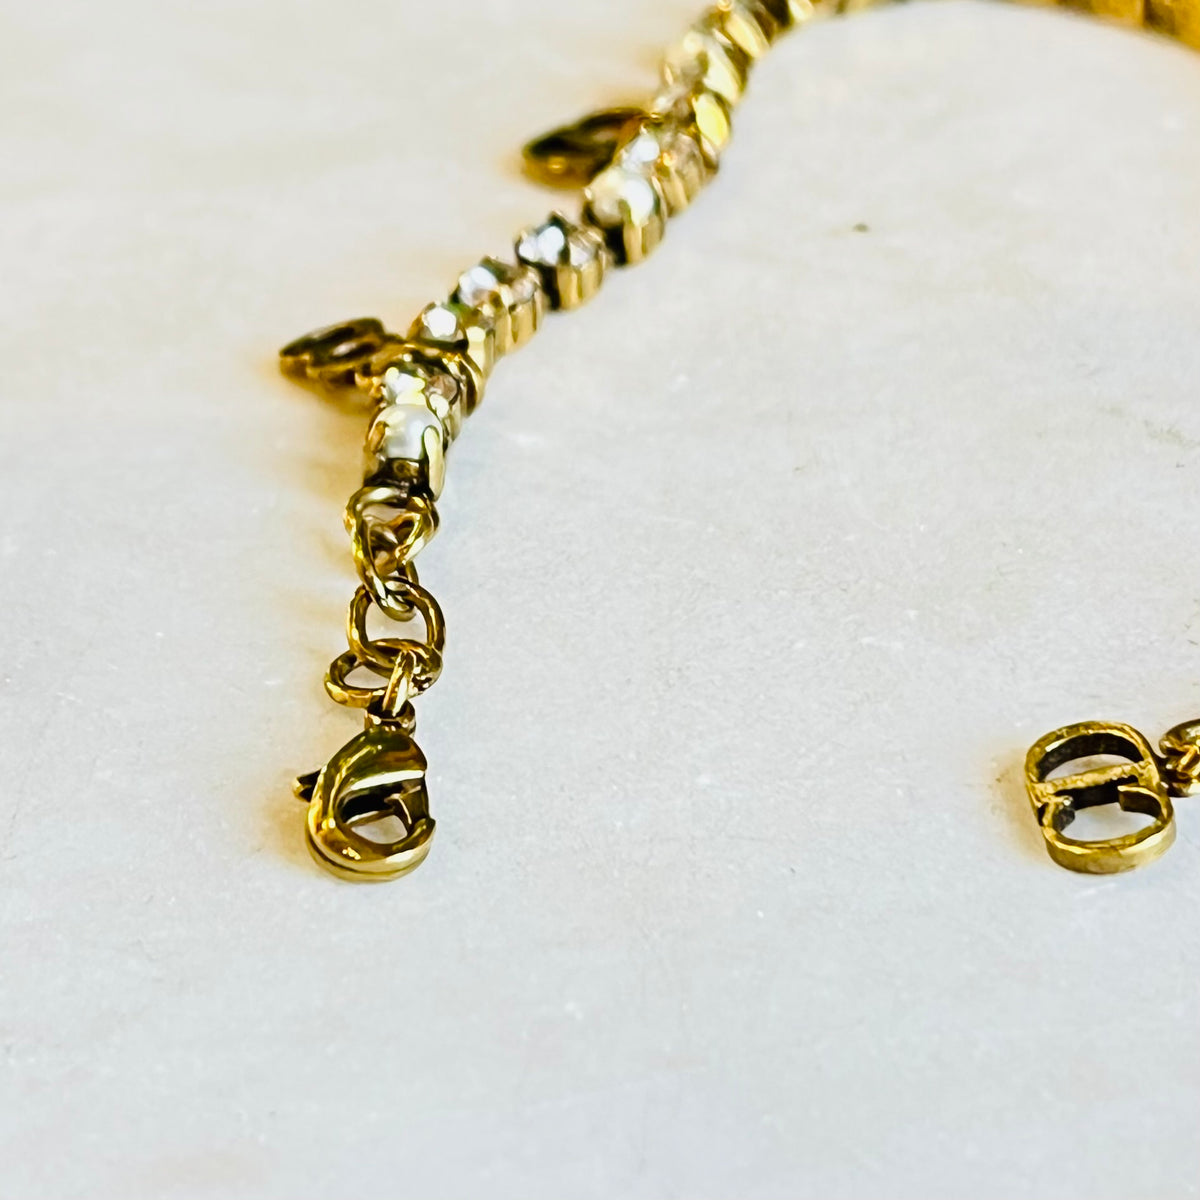 CHRISTIAN DIOR Gold-Tone Crystal Charm Bracelet